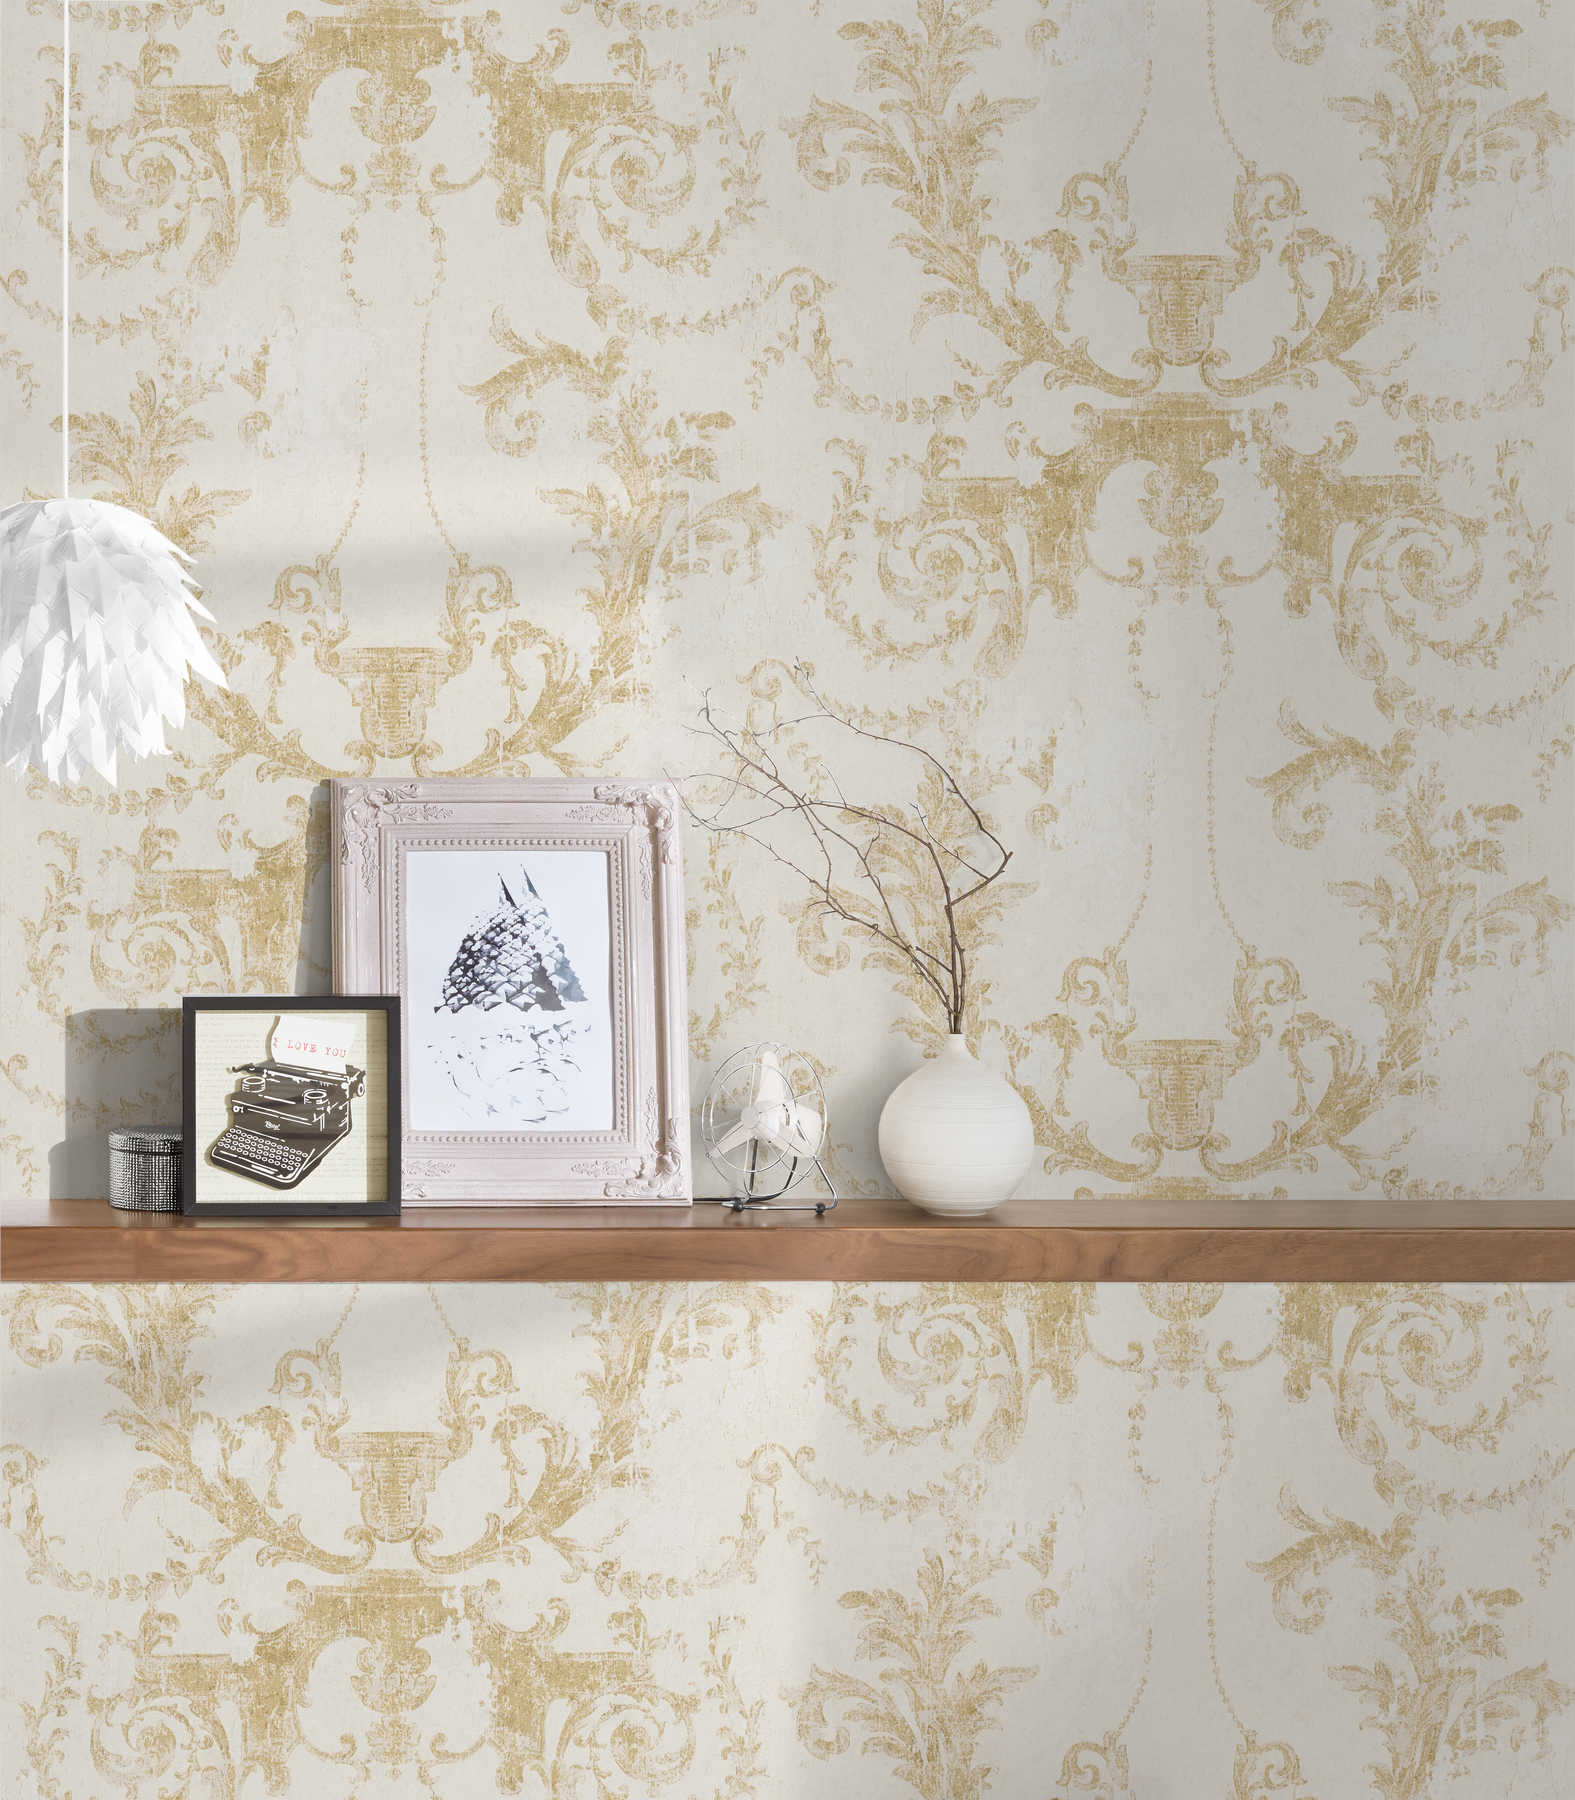             Ornament wallpaper vintage style & rustic - gold, cream
        